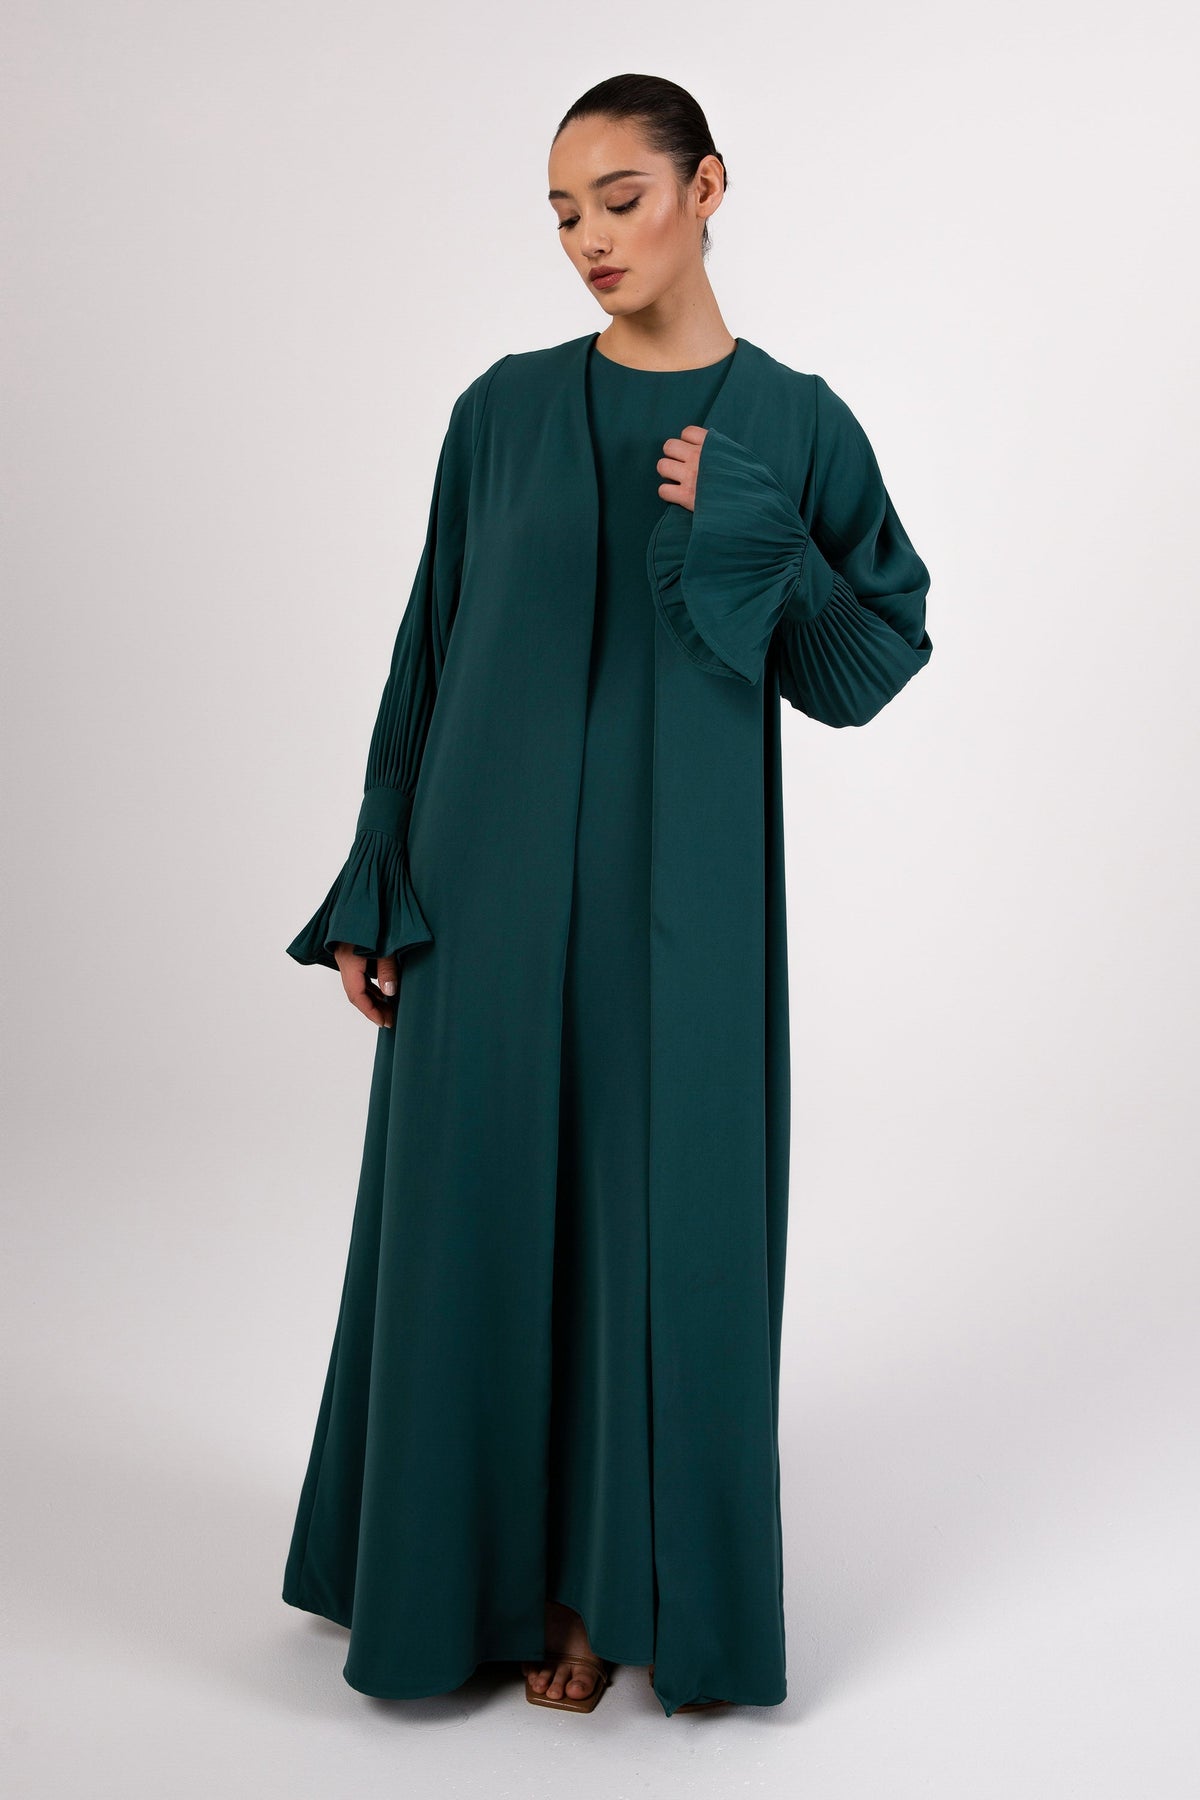 Jamila Cinched Sleeve Open Abaya - Teal epschoolboard 